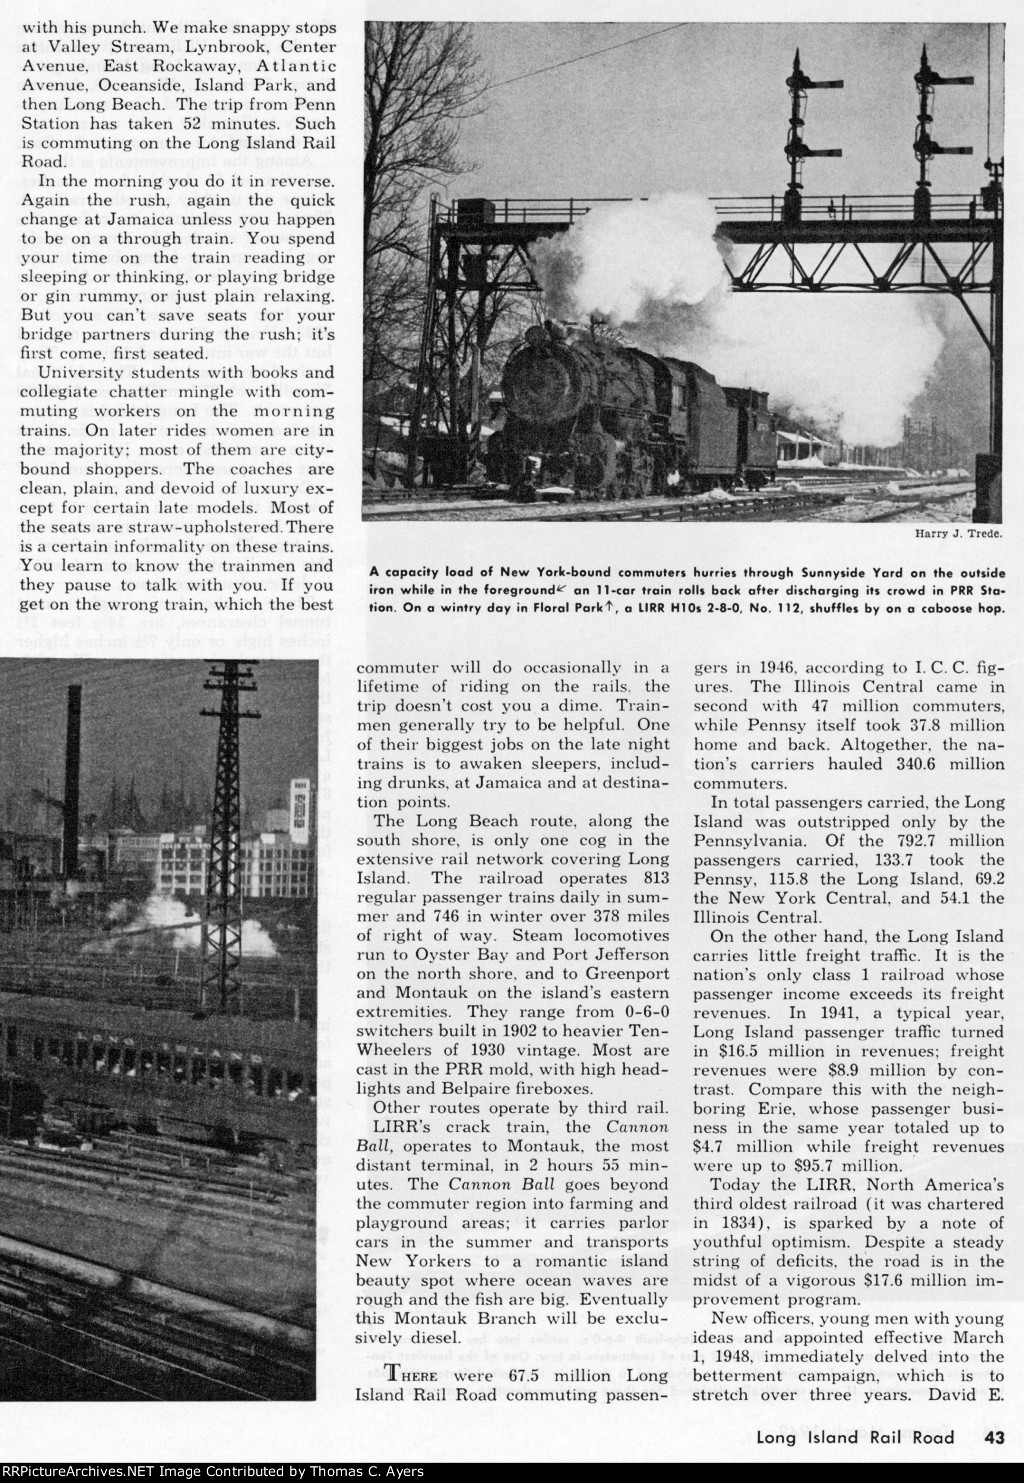 "Long Island Rail Road," Page 43, 1949